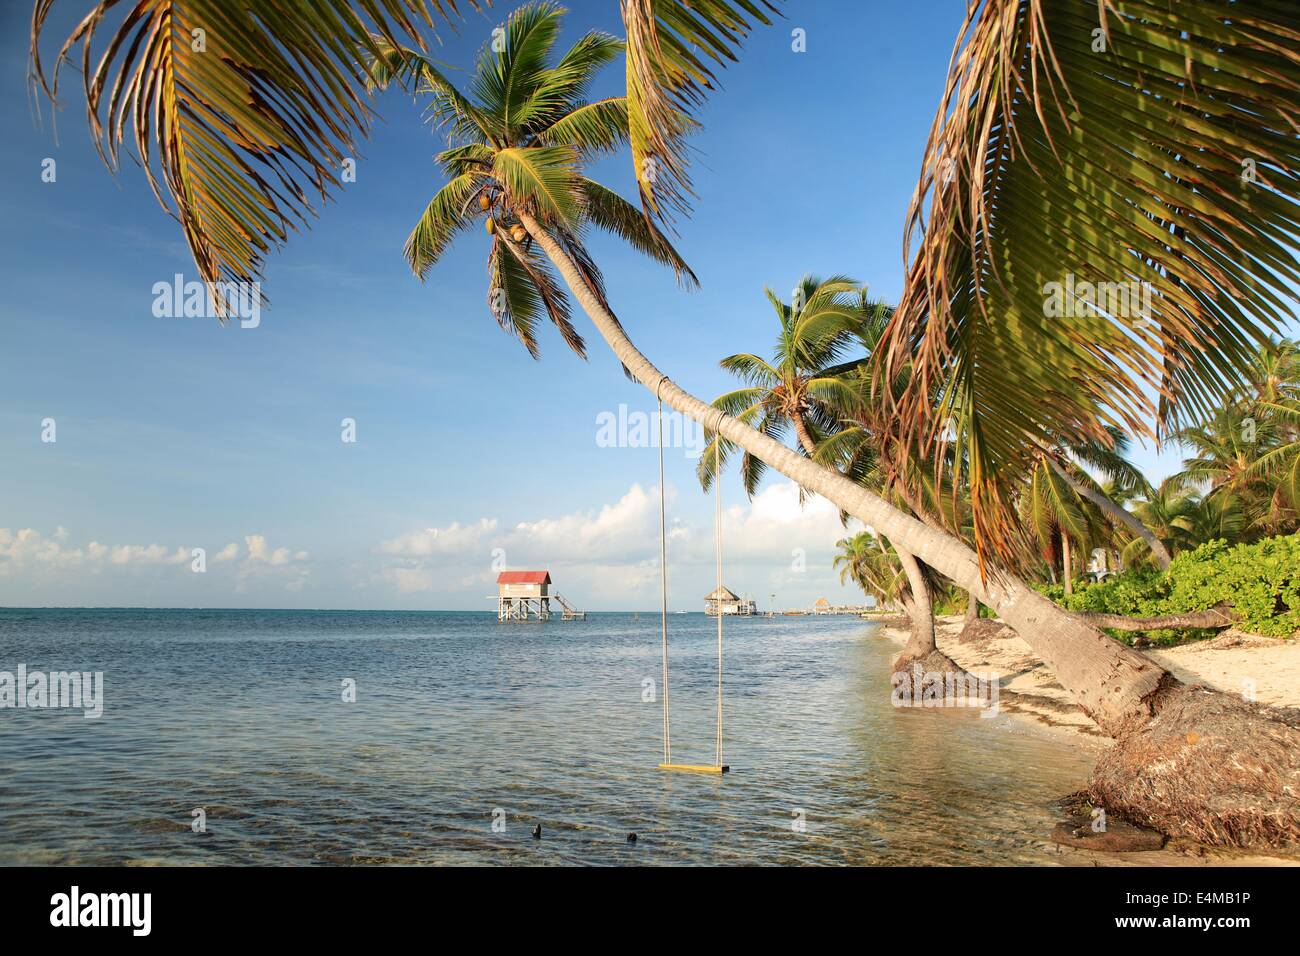 Beach scene in Ambergris Caye, Belize, in the Caribbean Sea Stock Photo